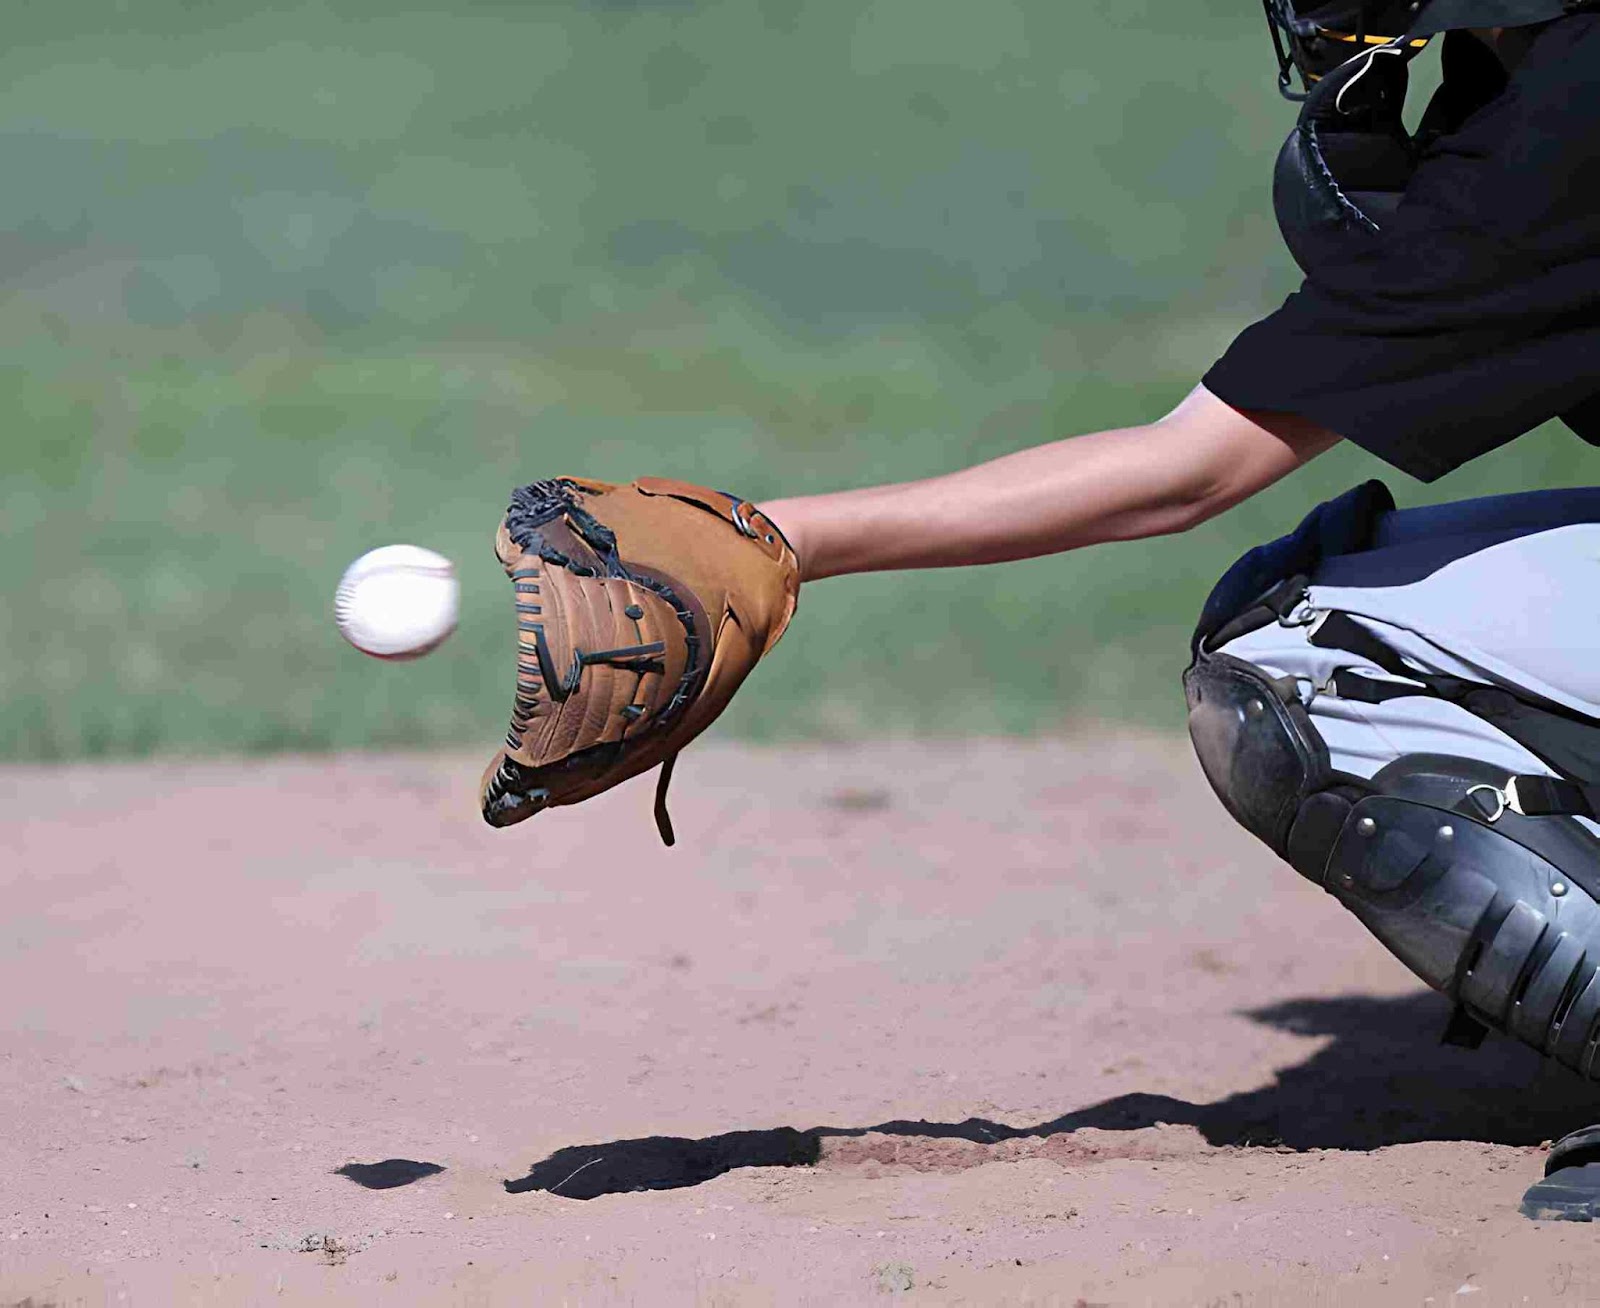 slow pitch softball gloves